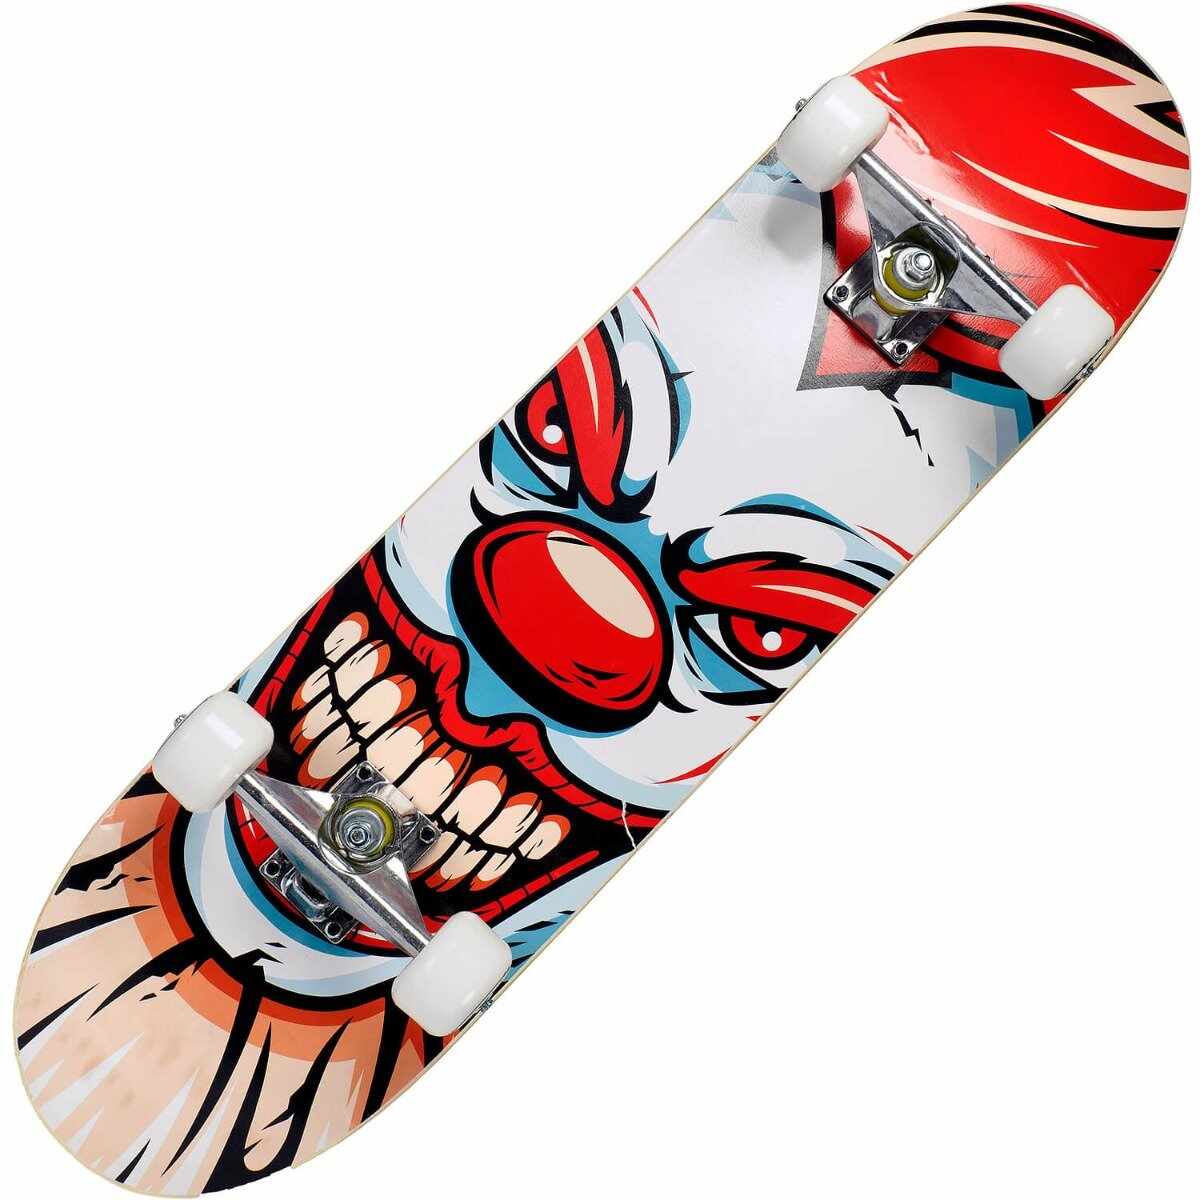 Skateboard Action One, ABEC-7 Aluminiu, 79 x 20 cm, Multicolor Clown